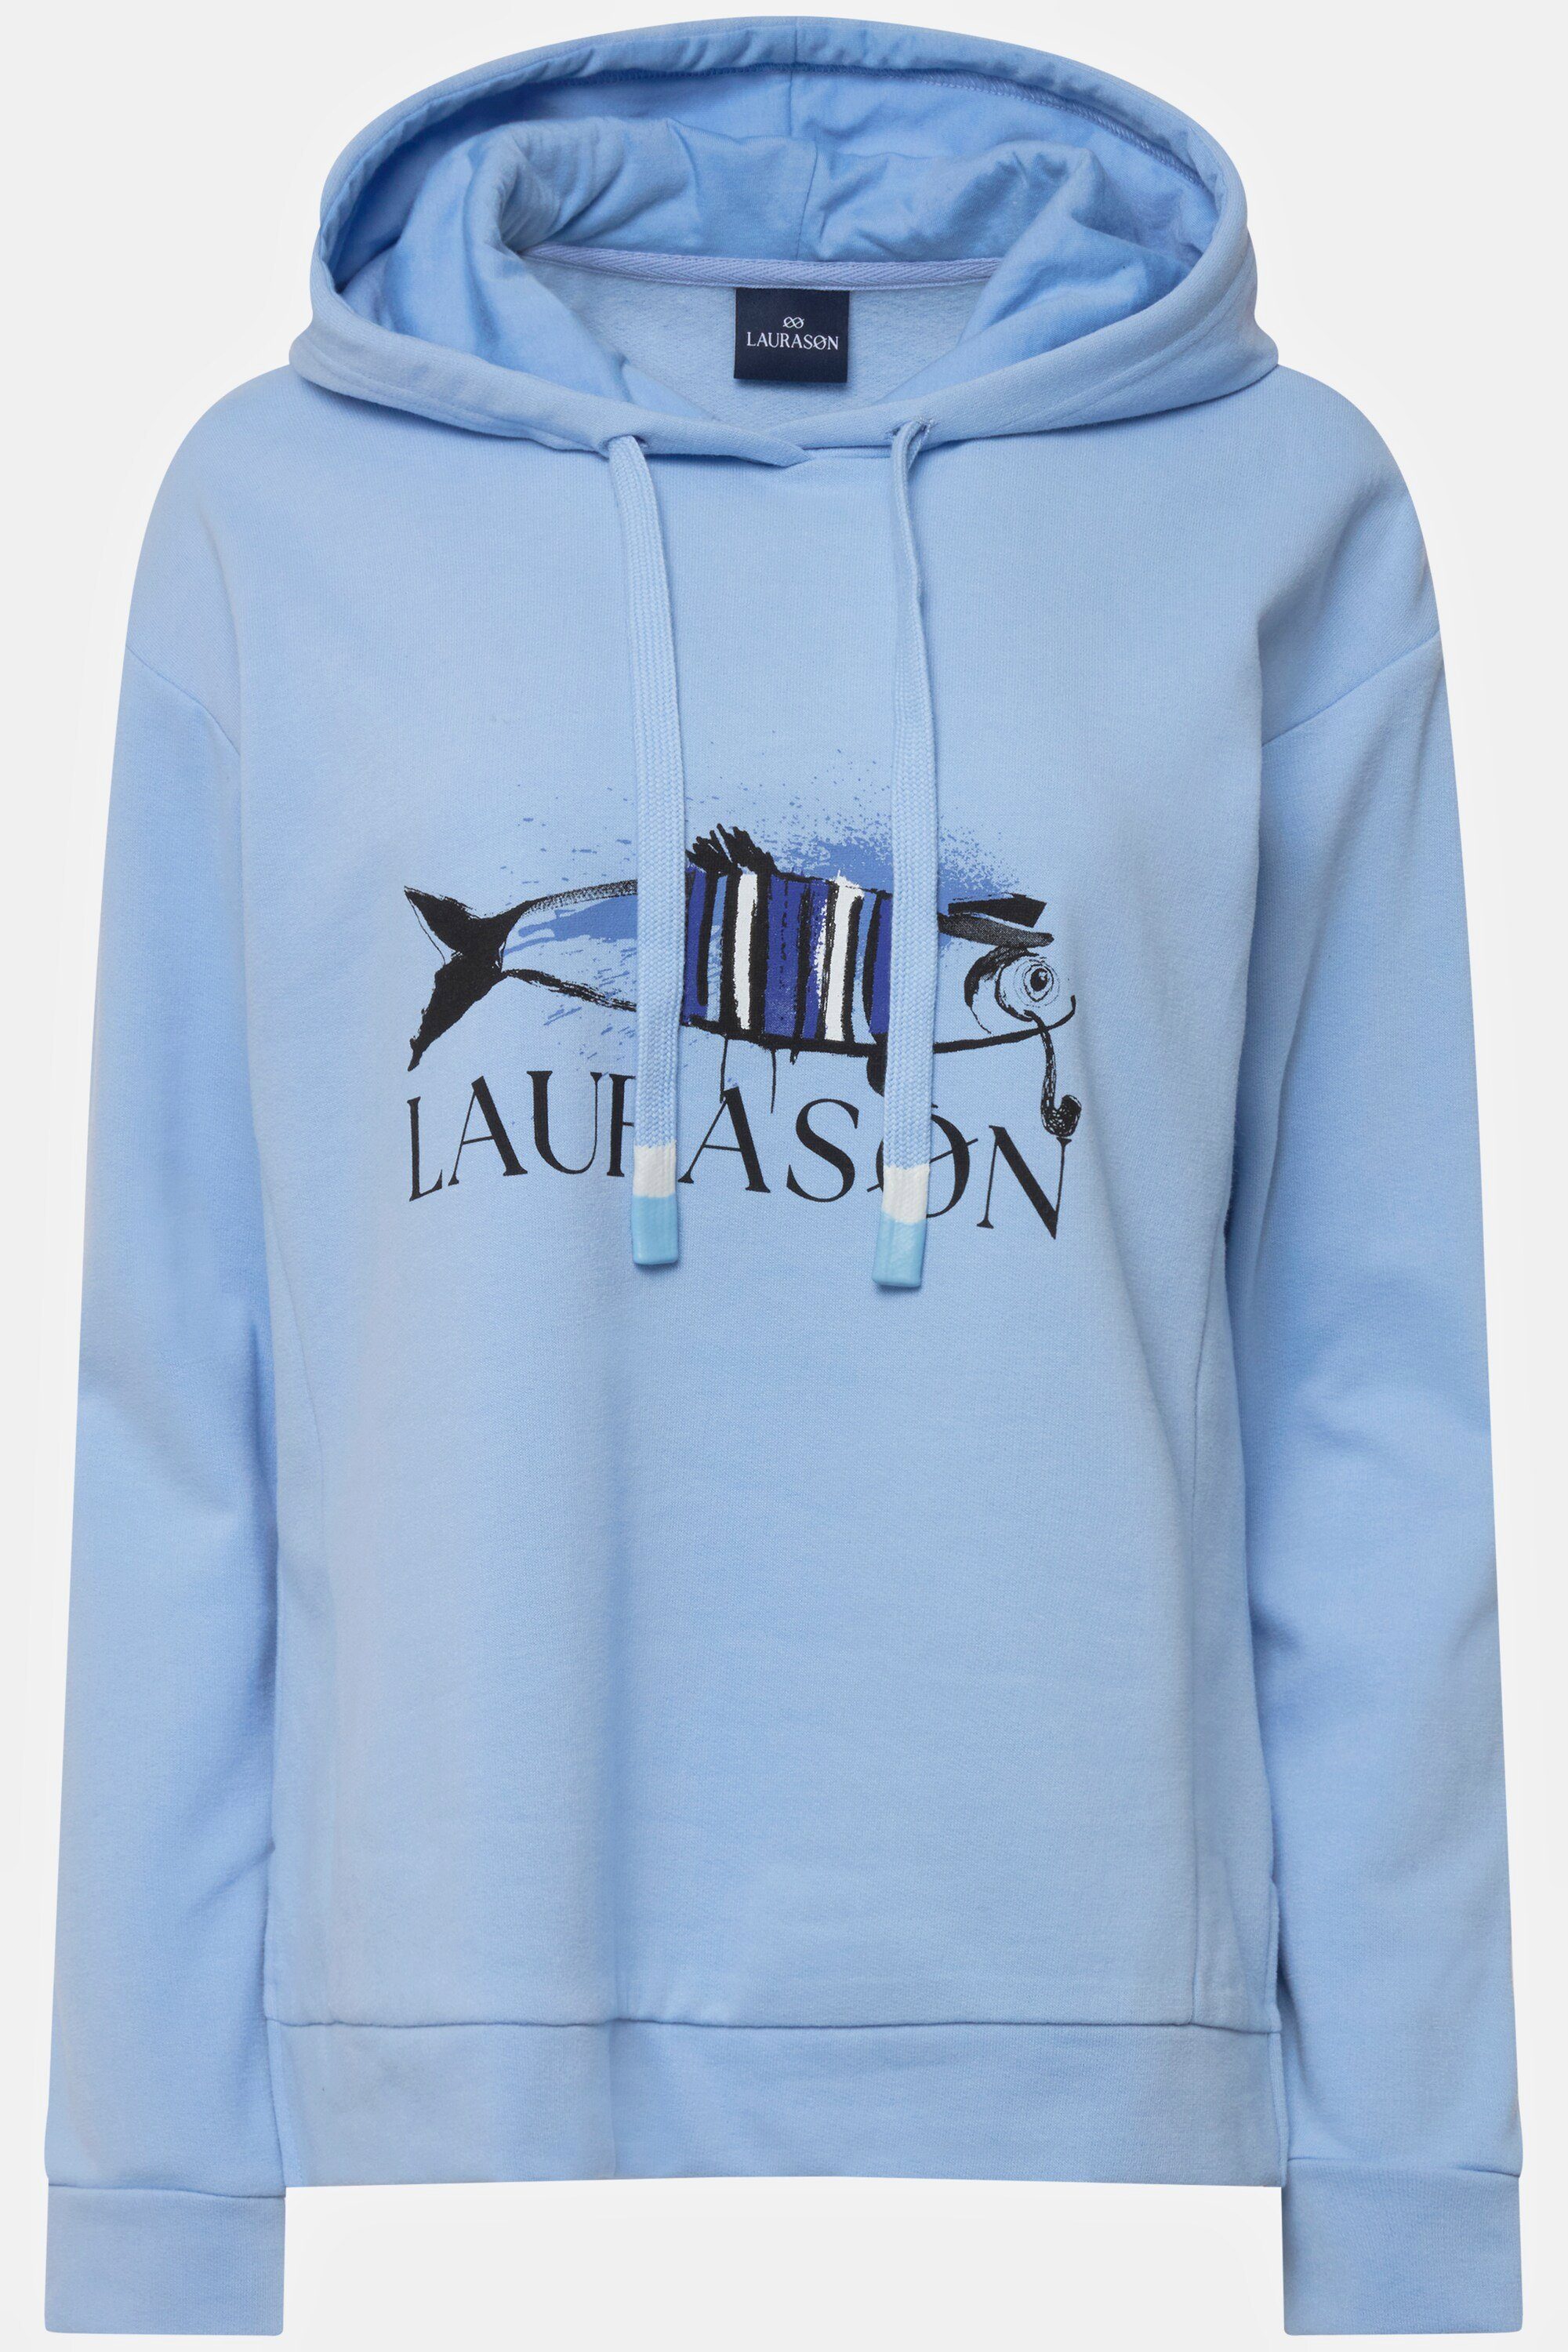 Laurasøn Sweatshirt Hoodie Fisch Motiv Langarm Kapuze eisblau